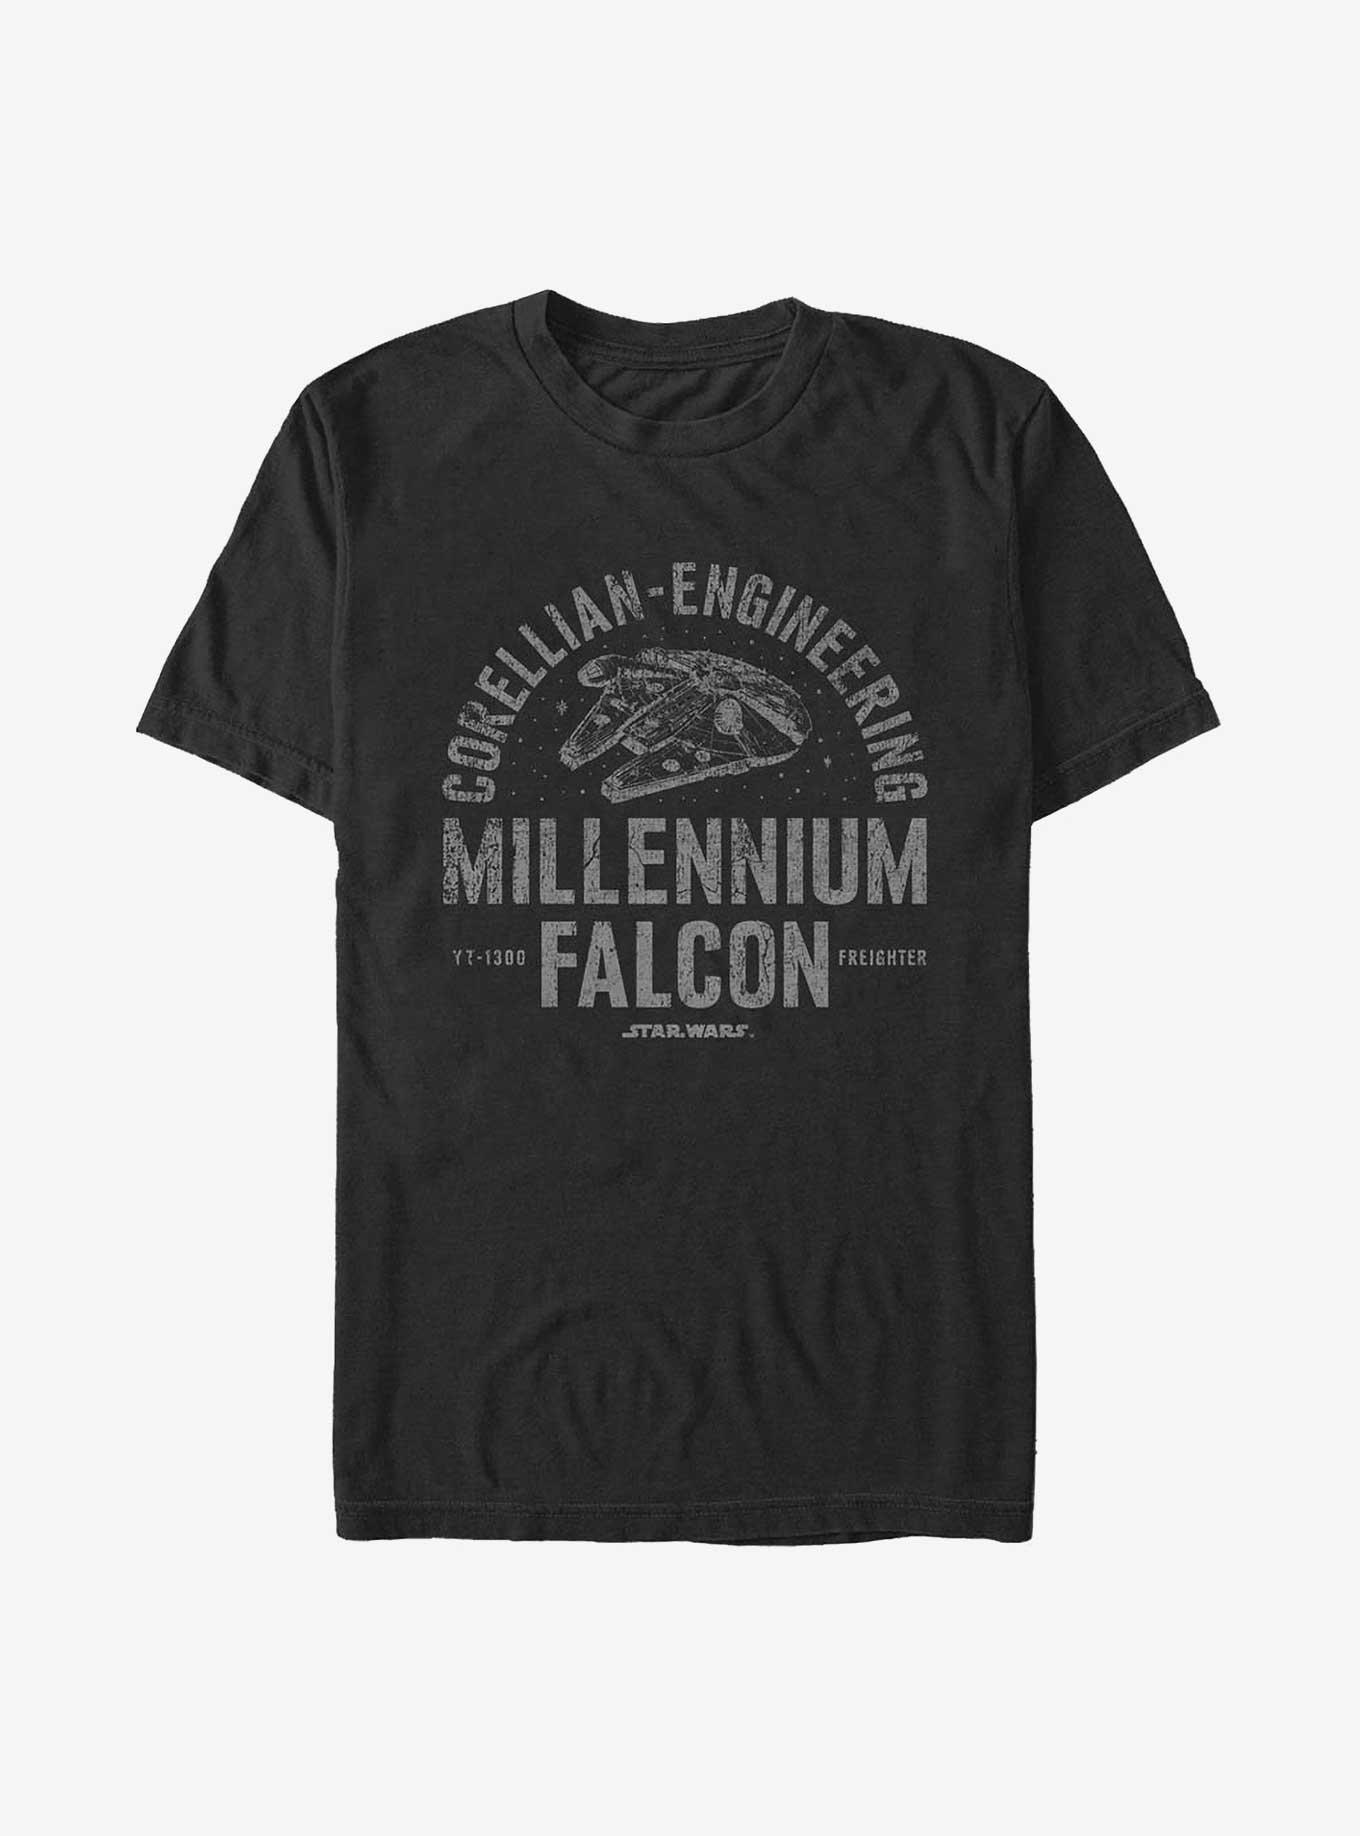 Star Wars Corellian Engineering Millennium Falcon T-Shirt